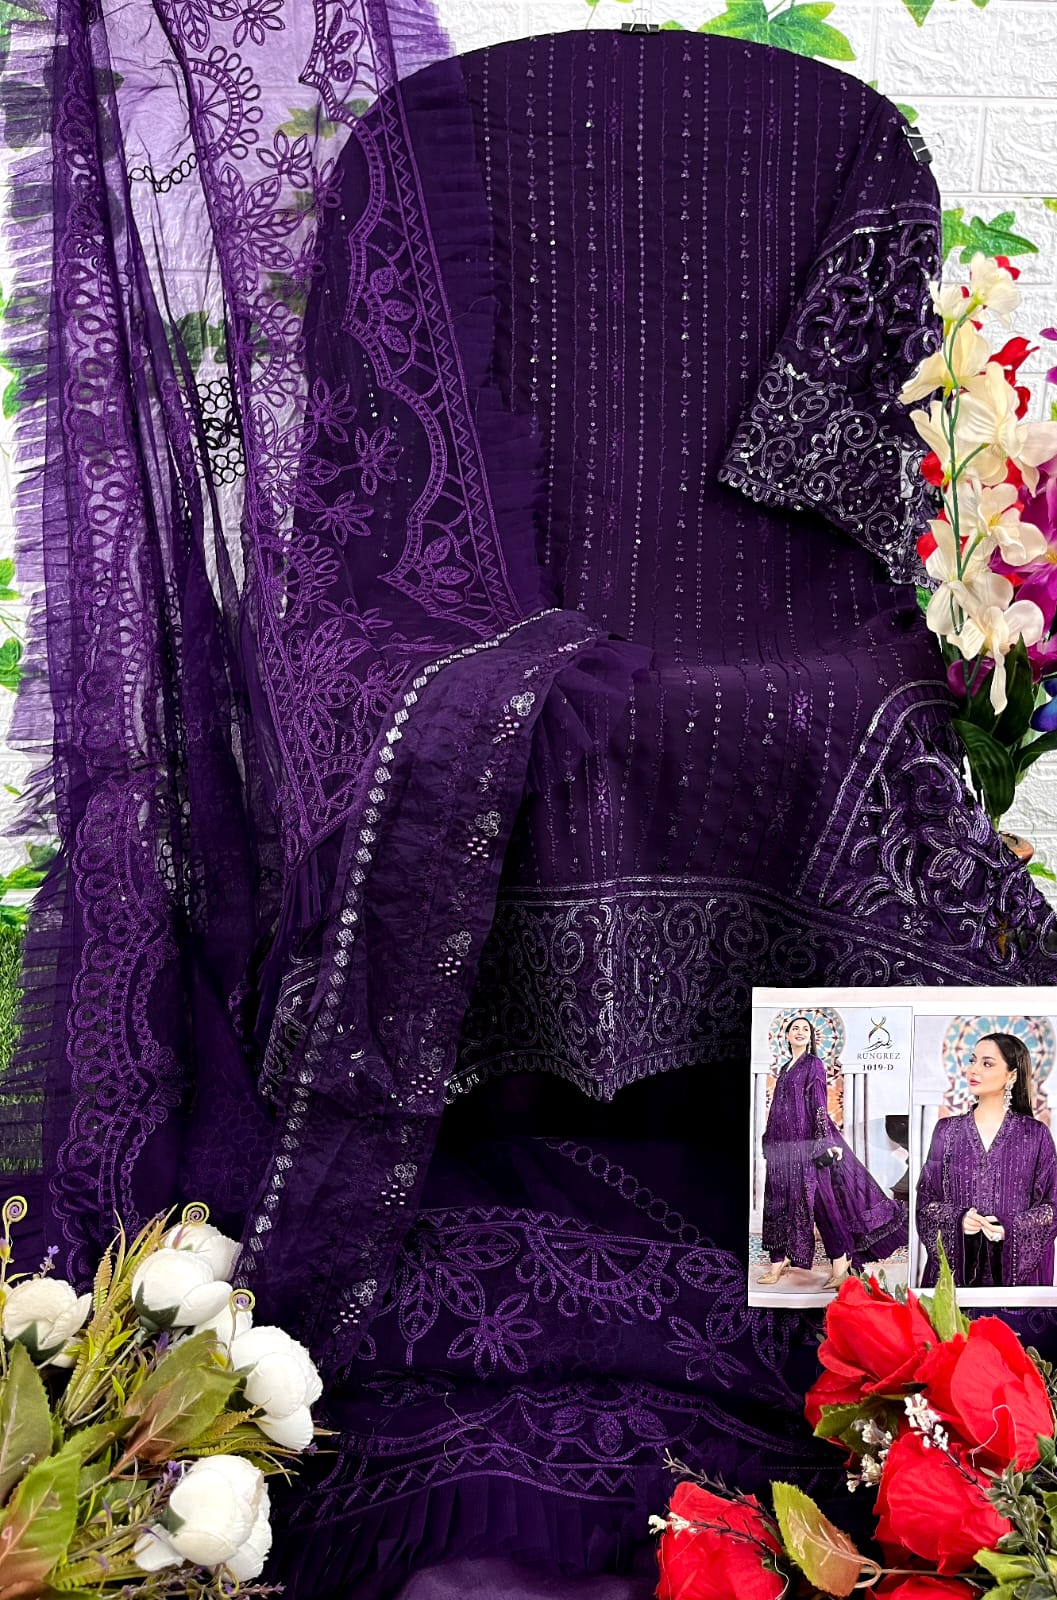 Buy Georgette Embroidery R 1019 D Rungrez Pakistani Salwar S